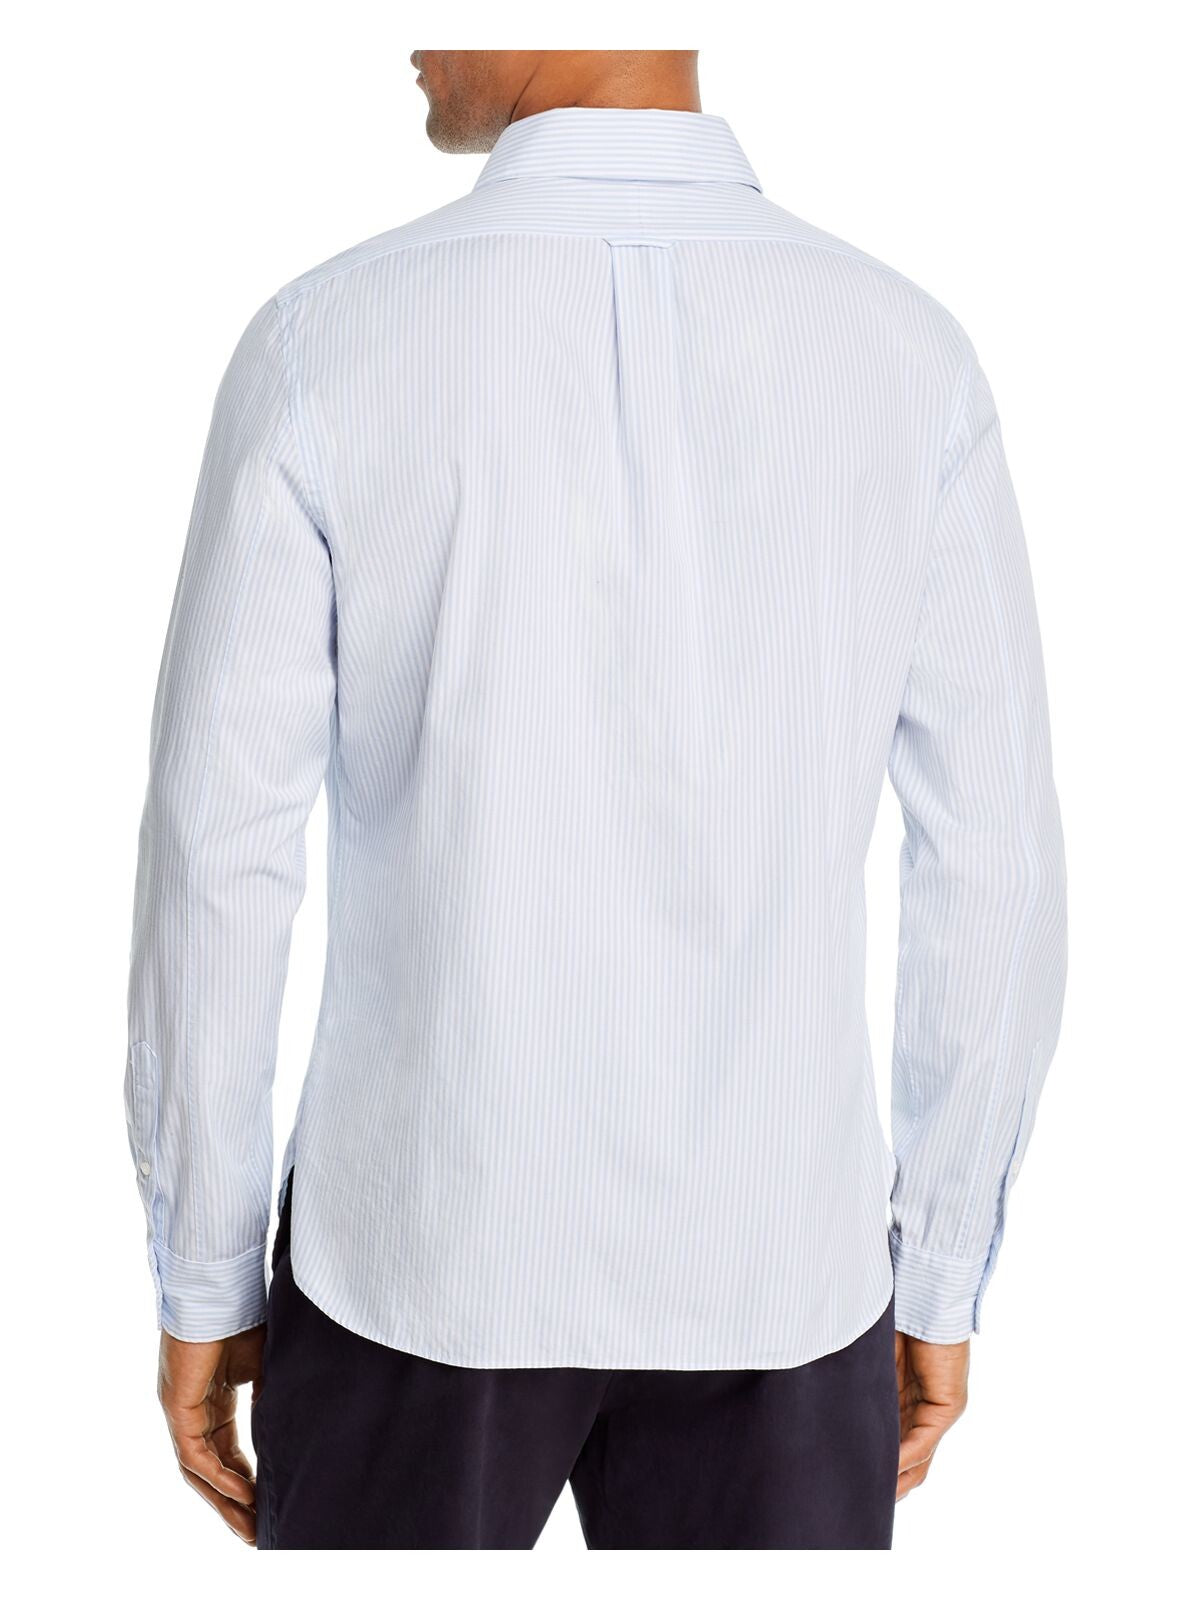 The Mens store Mens Light Blue Striped Classic Fit Button Down Cotton Blend Casual Shirt XL